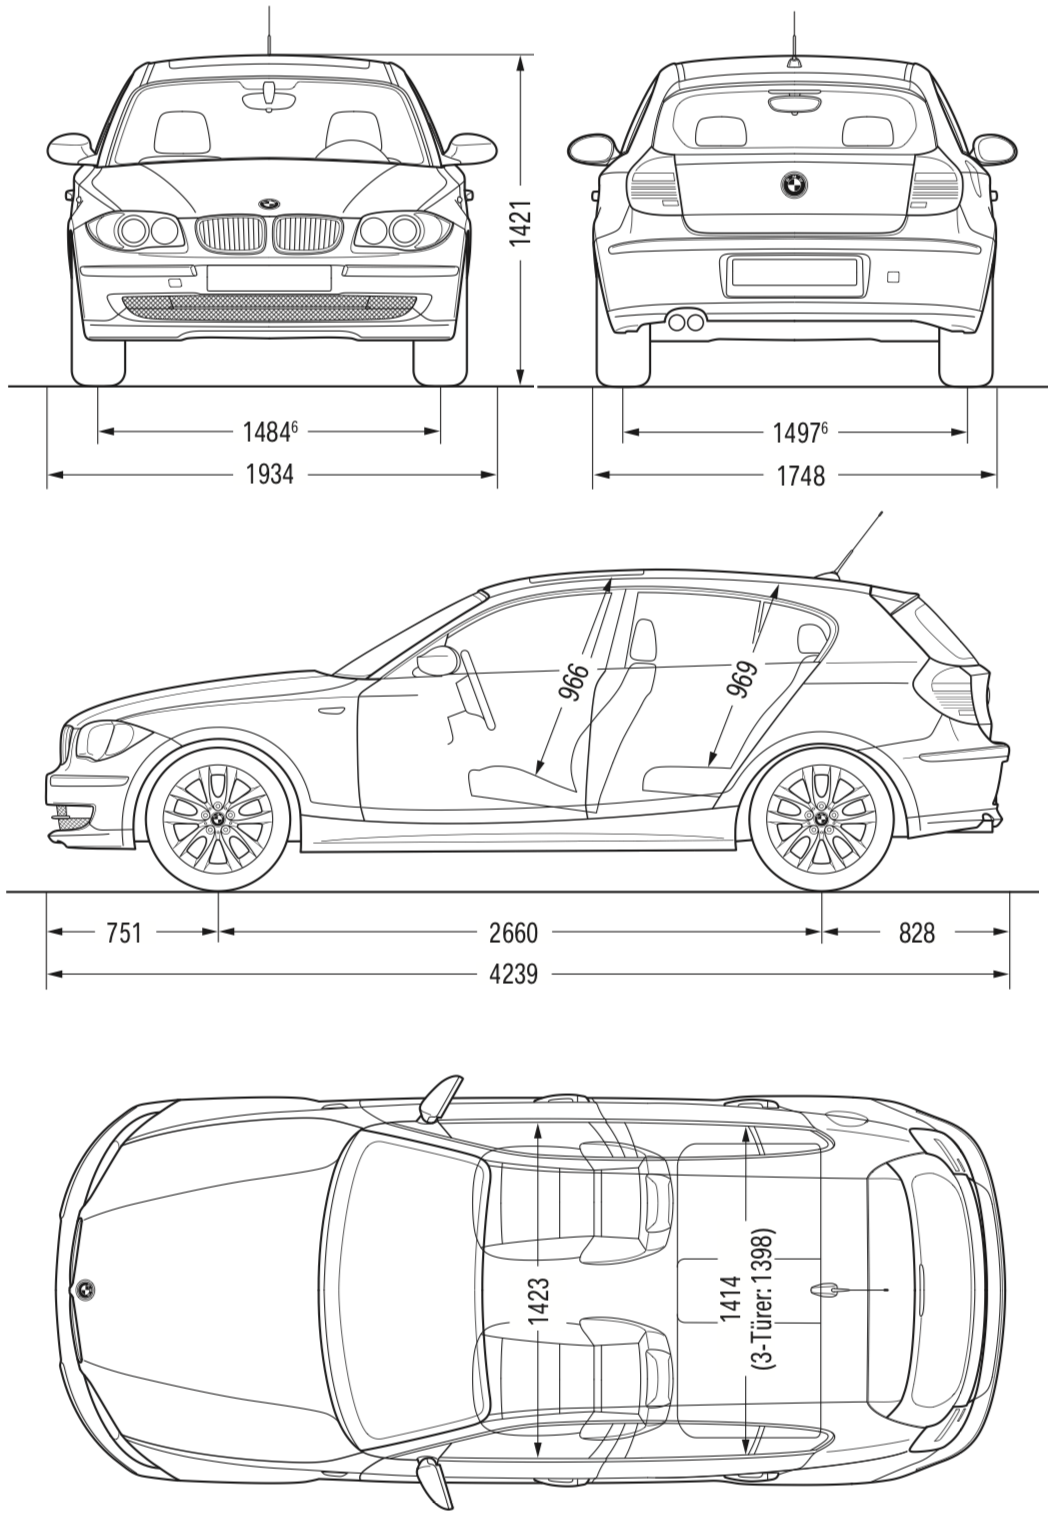 BMW E87 1 Series 5 door - Technische Daten zu allen Motorisierungen